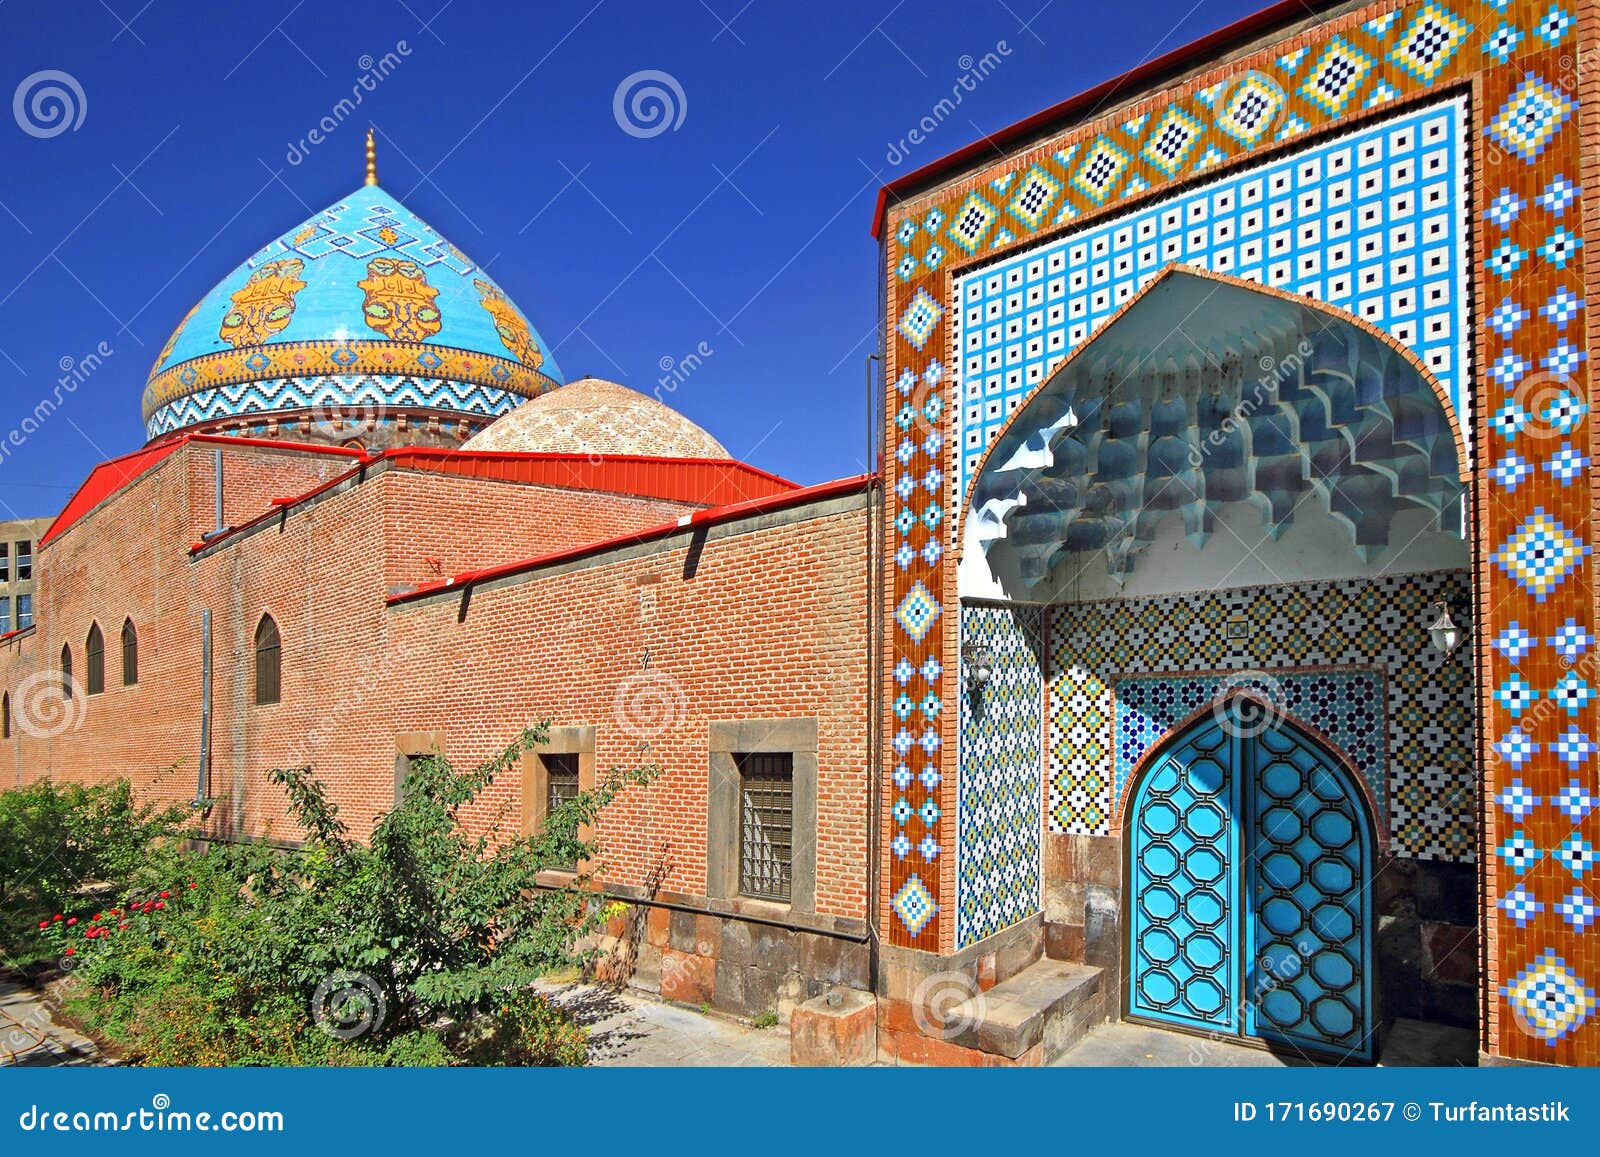 blue mosque in yerevan, armenia